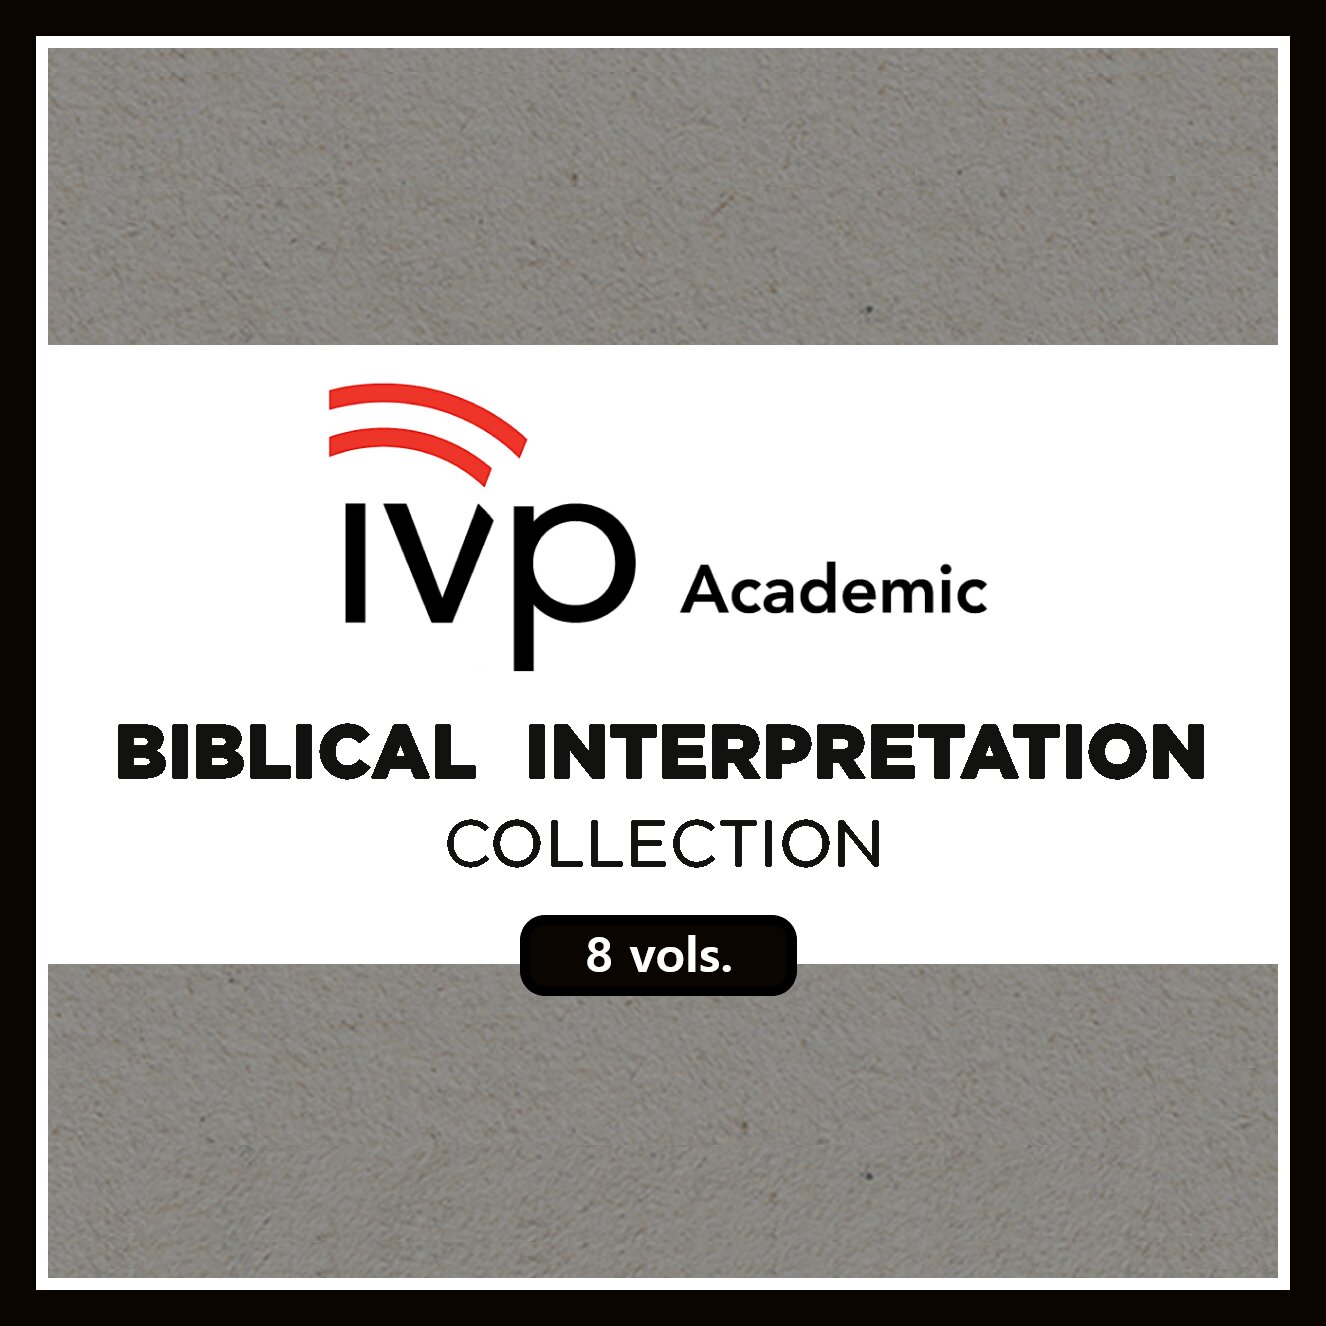 IVP Academic Biblical Interpretation Collection (8 vols.)